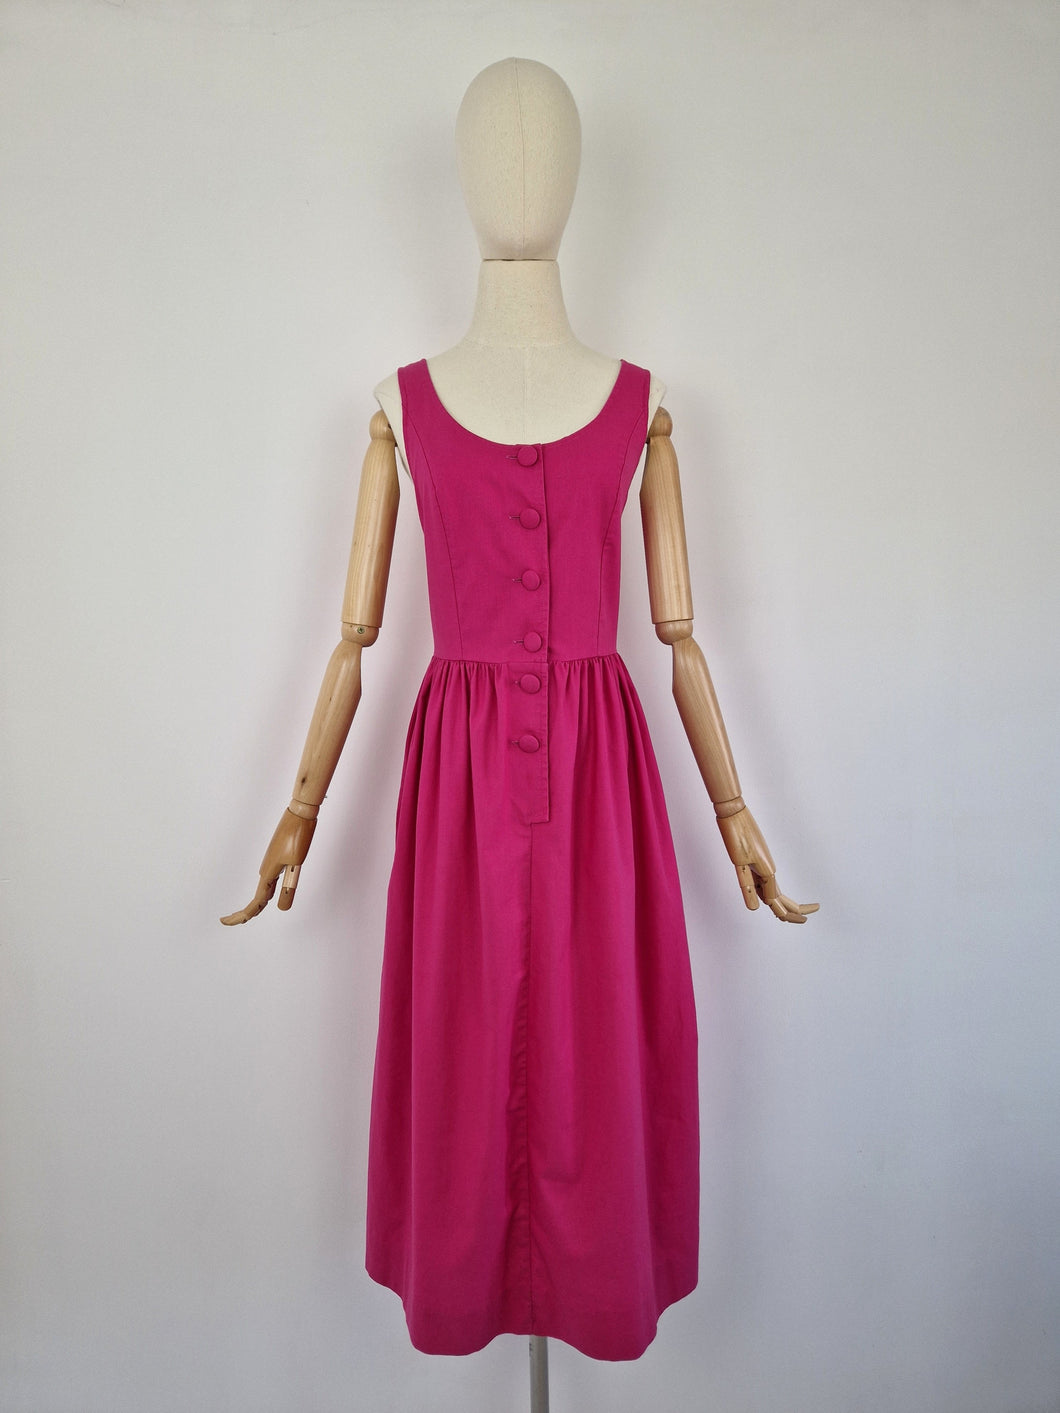 Vintage 80s Laura Ashley pink pinafore dress